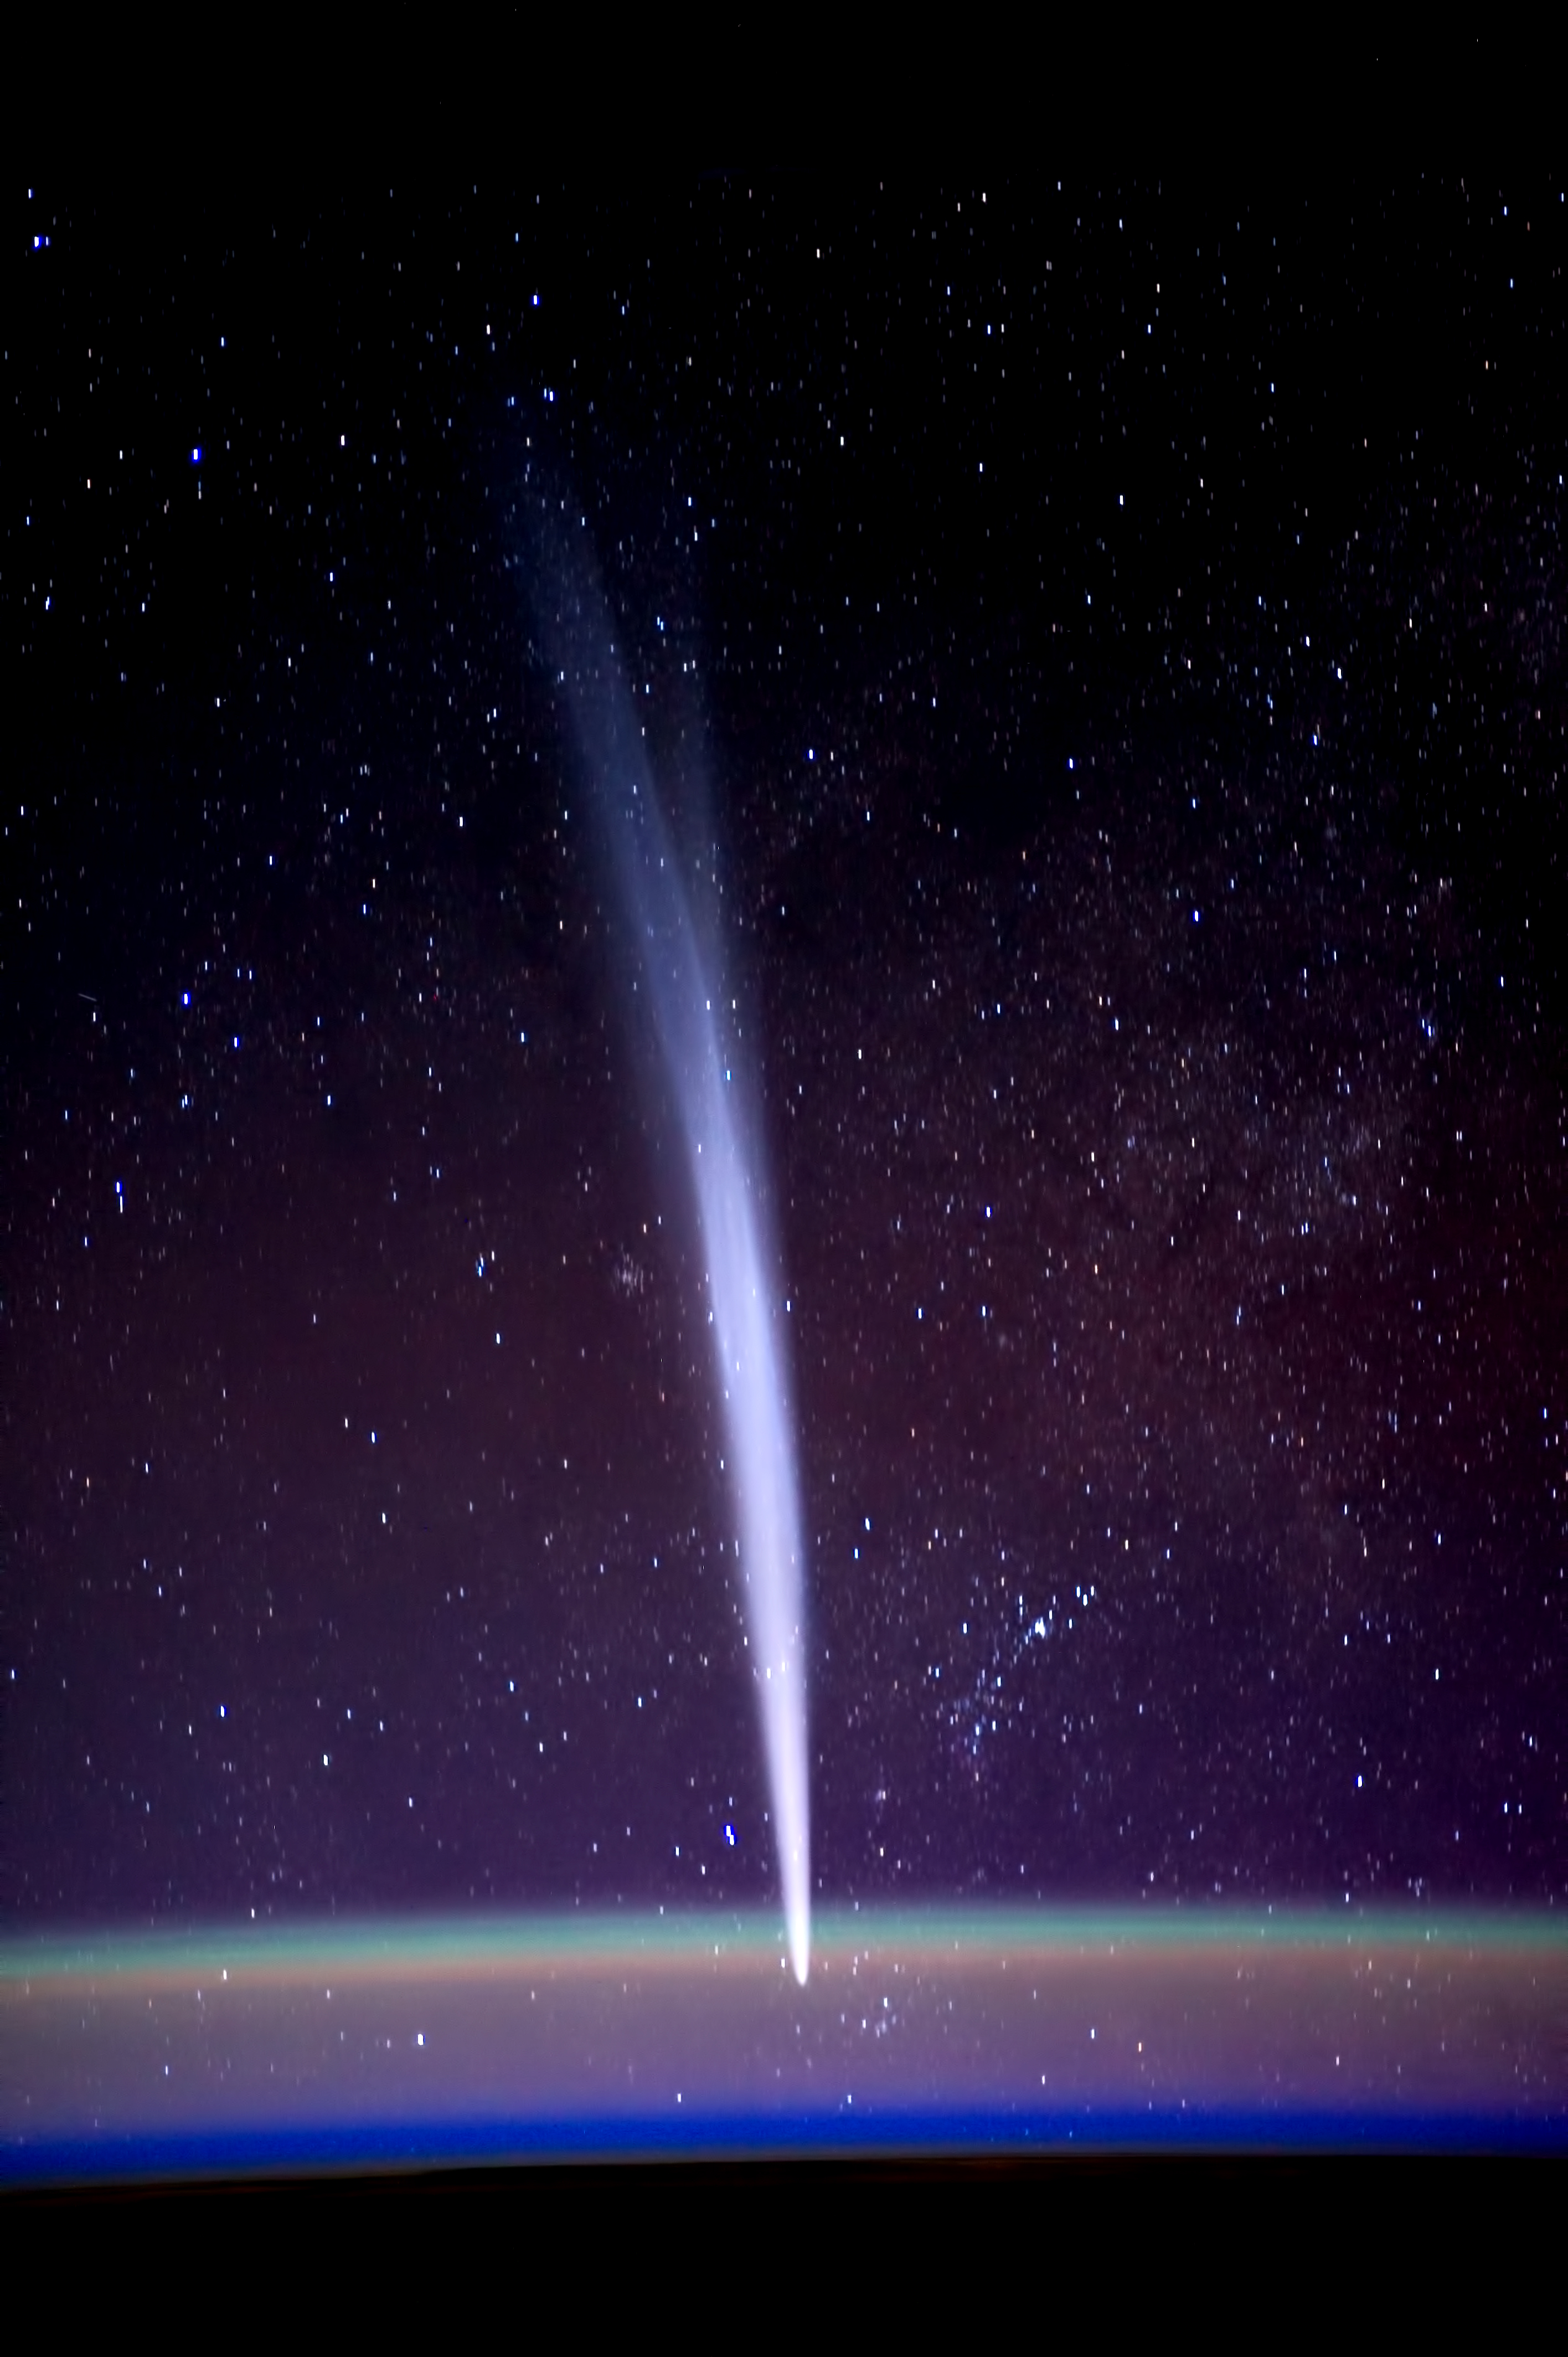 Comet_Lovejoy_photographed_by_Dan_Burbank